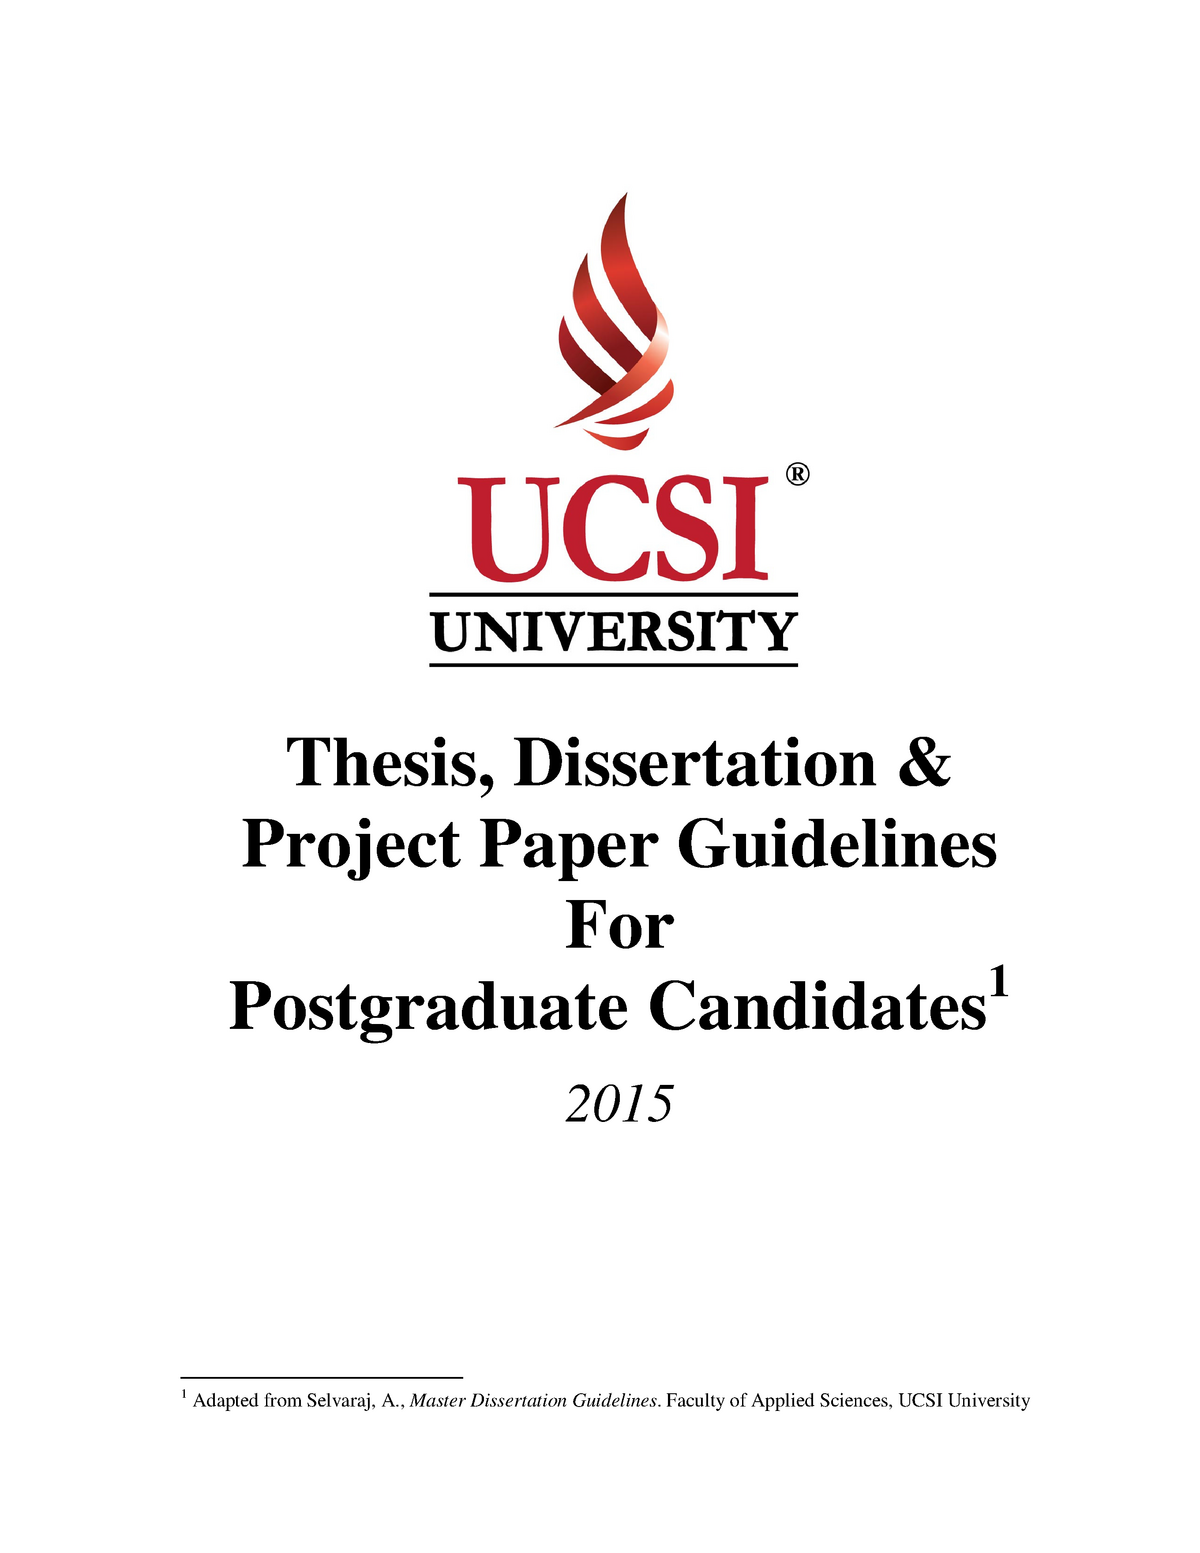 postgraduate dissertation title means